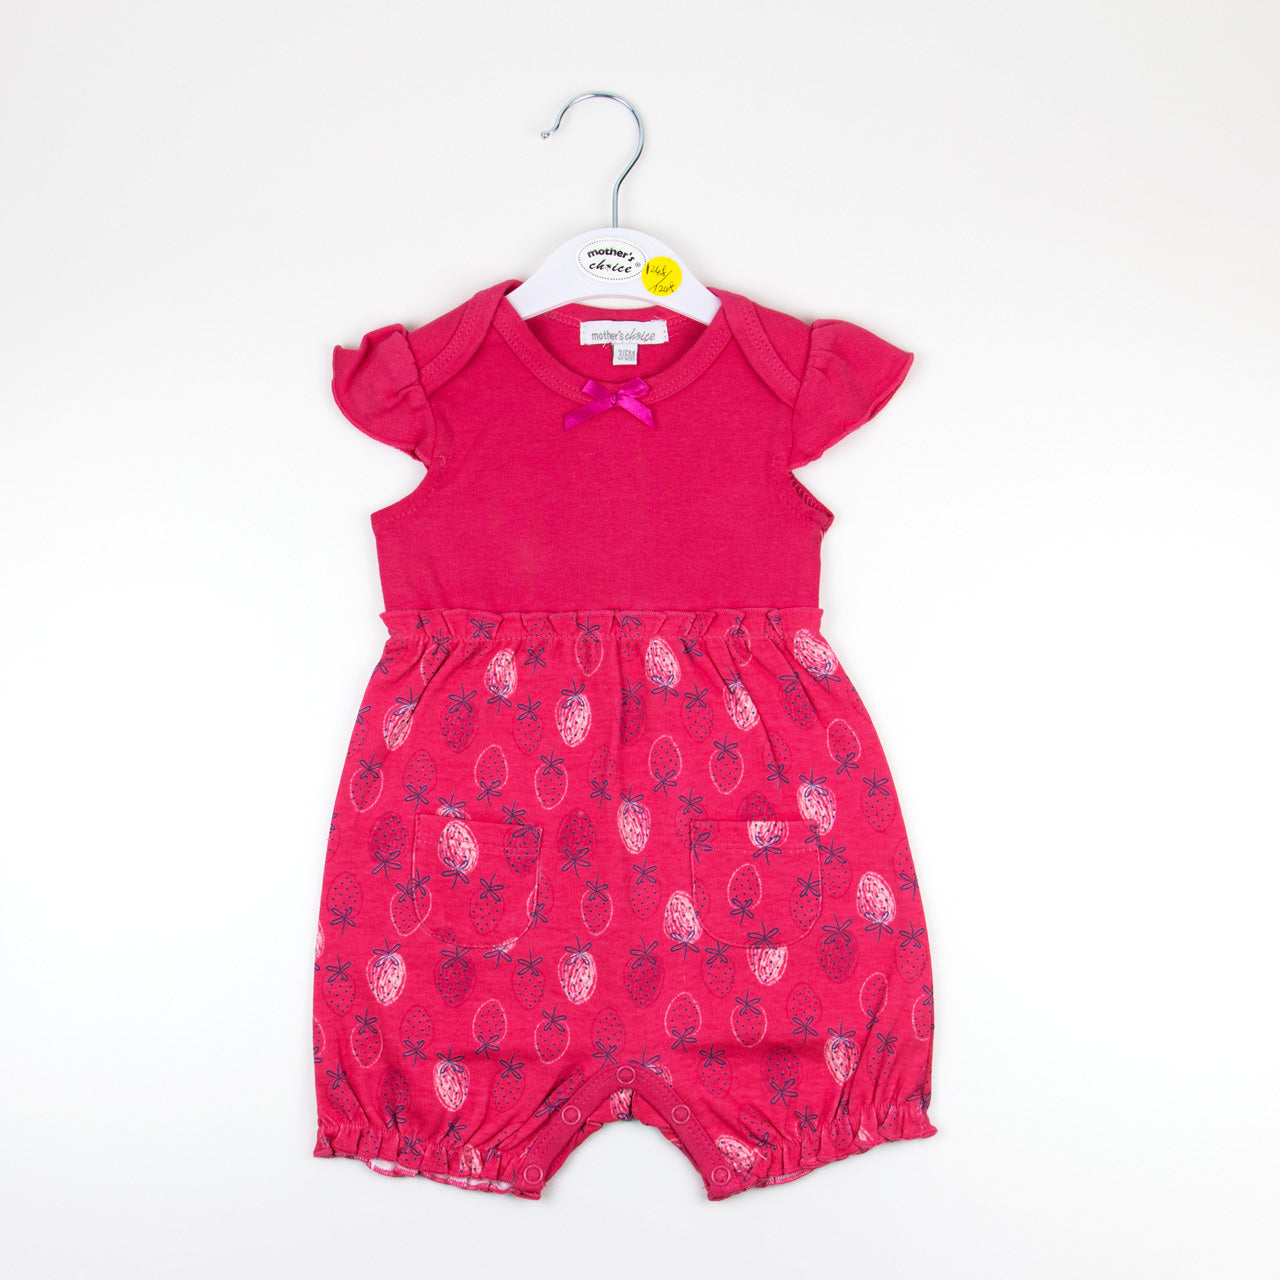 Motherschoice Infant Girls Short Sleeves Romper Pink IT9557